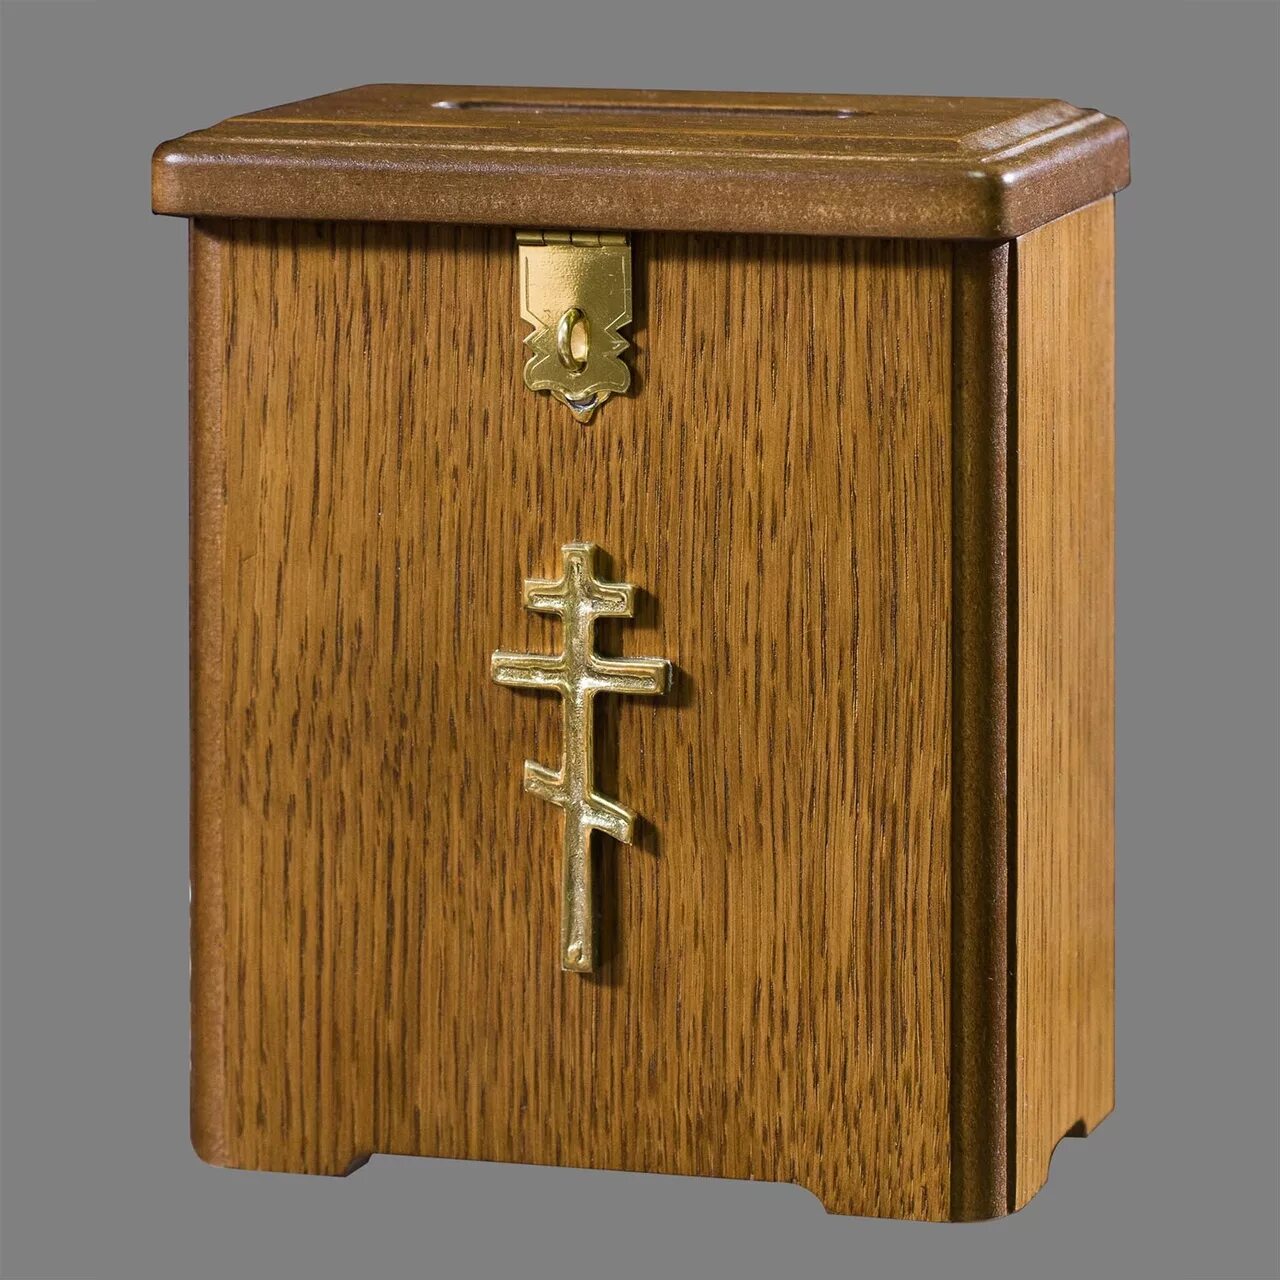 Церковный ящик для пожертвований. Церковные кружки для пожертвований. Ящик для пожертвований деревянный. Ящик для пожертвований деревянный для храма.